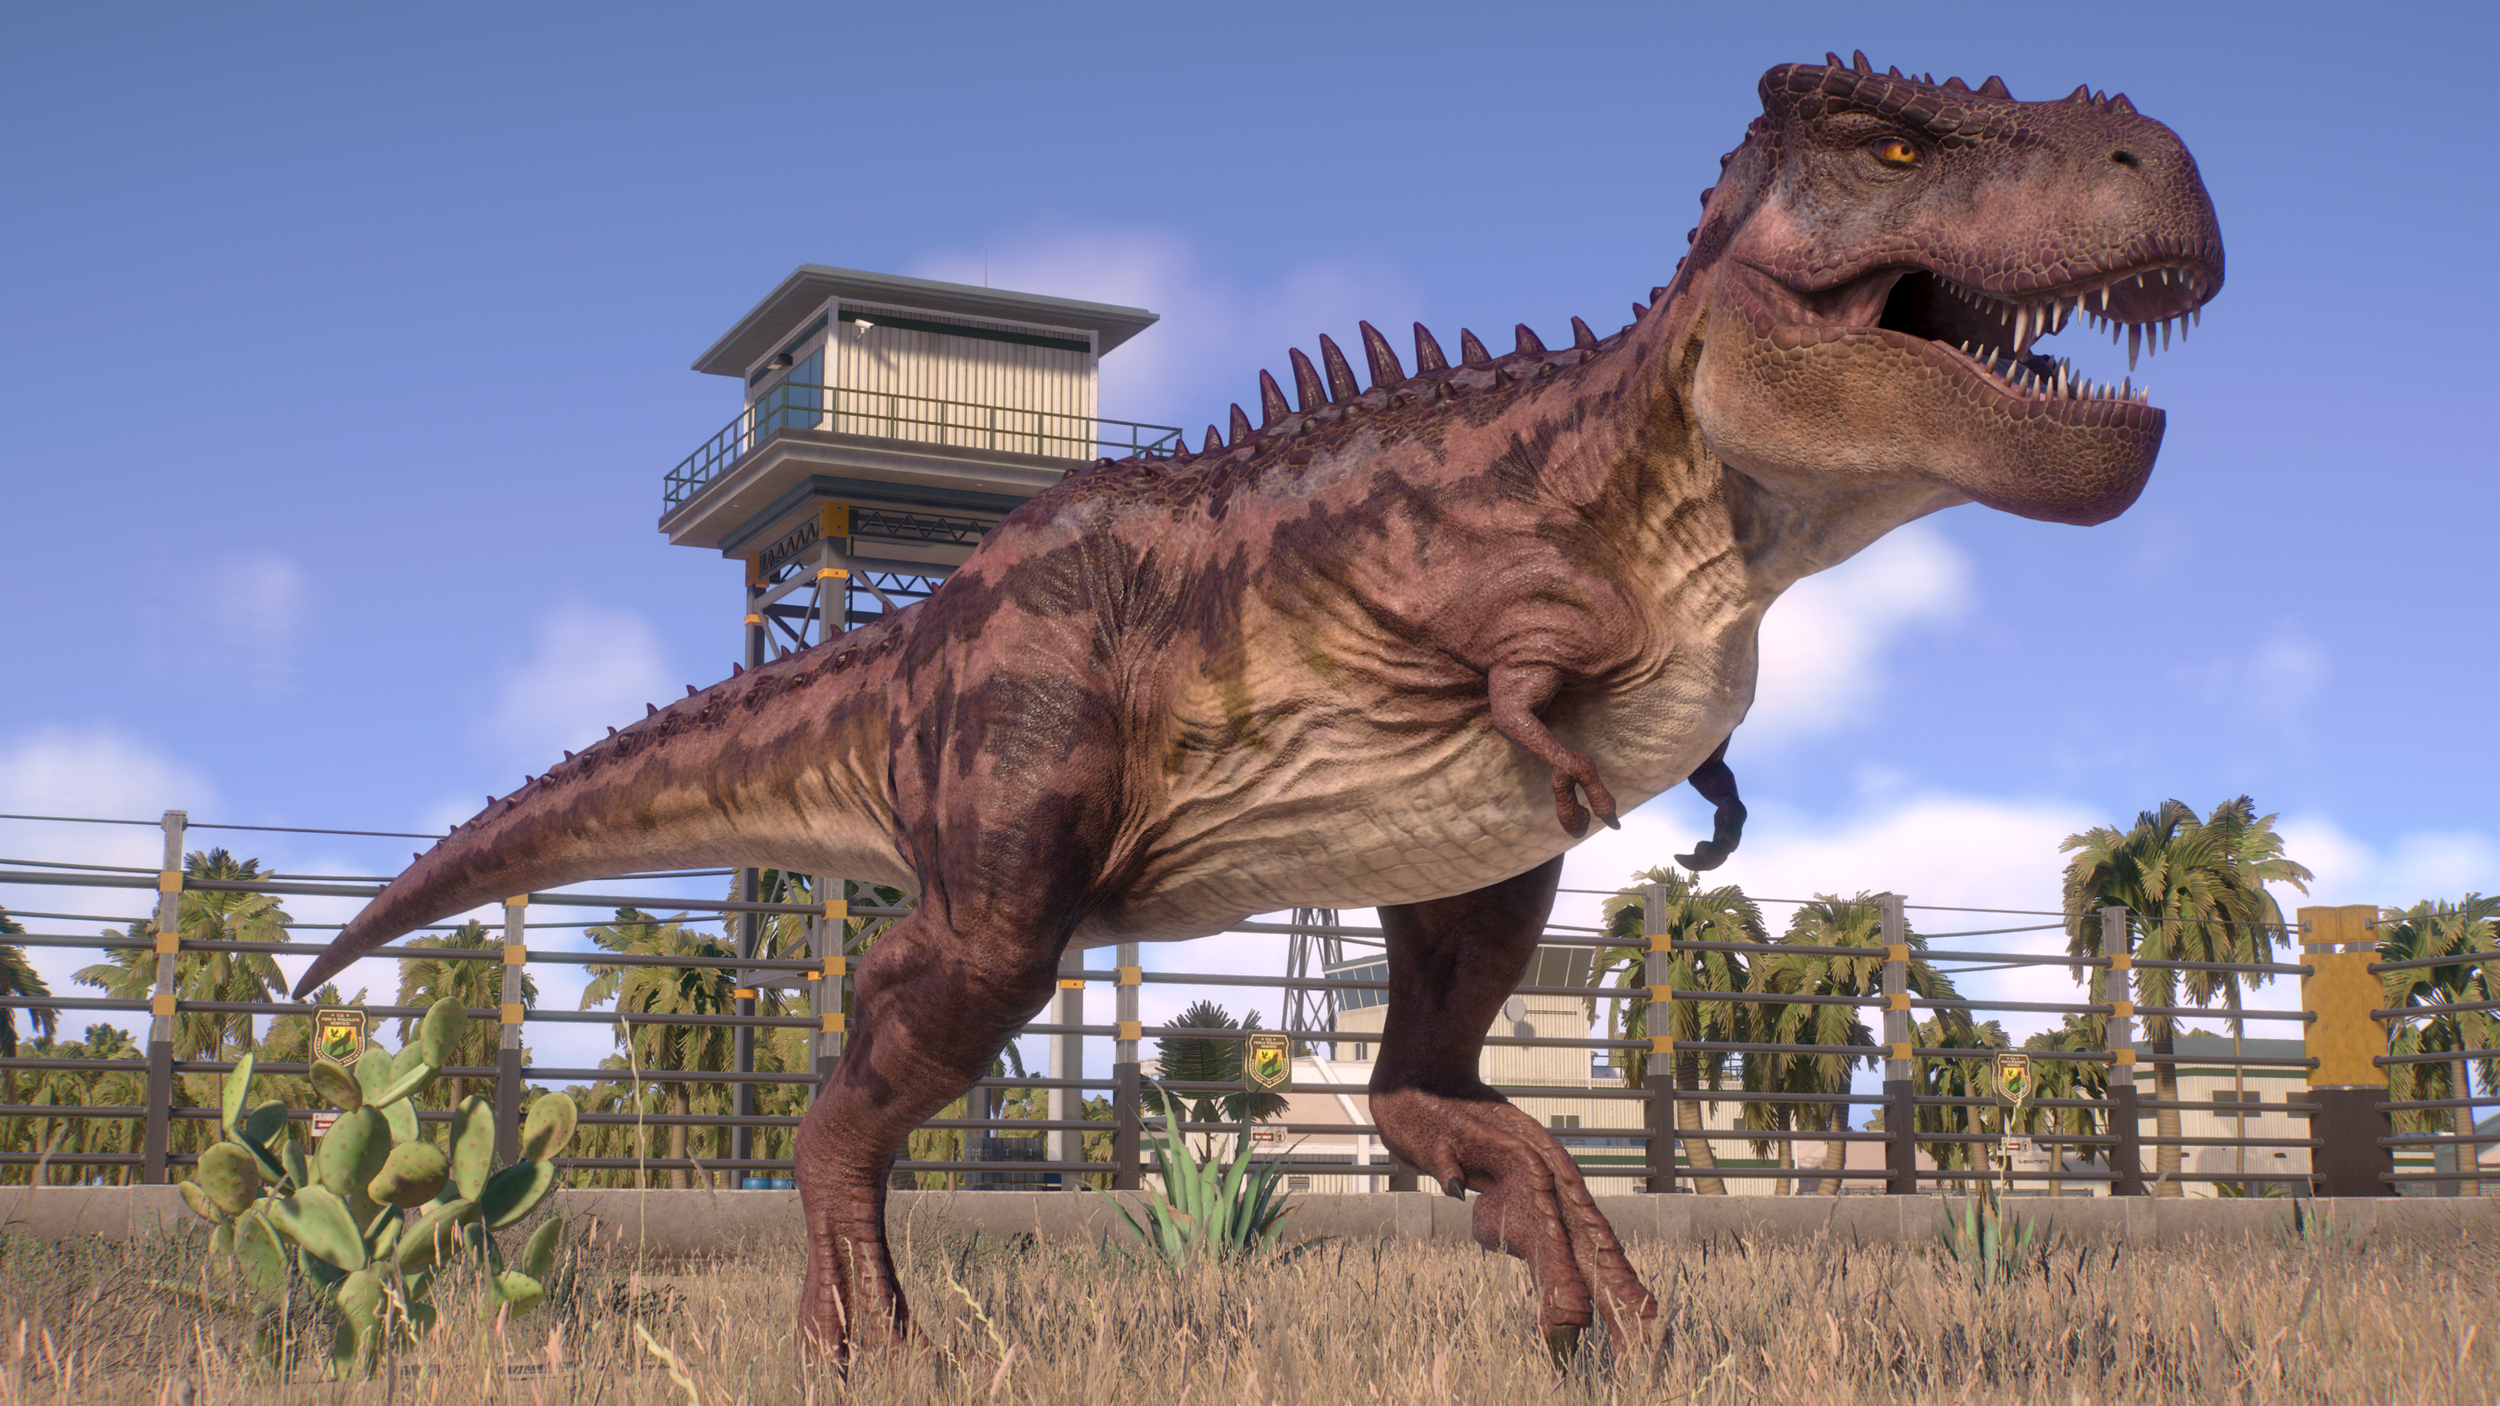 Jurassic World Evolution 2: How to get the Tyrannosaurus Rex